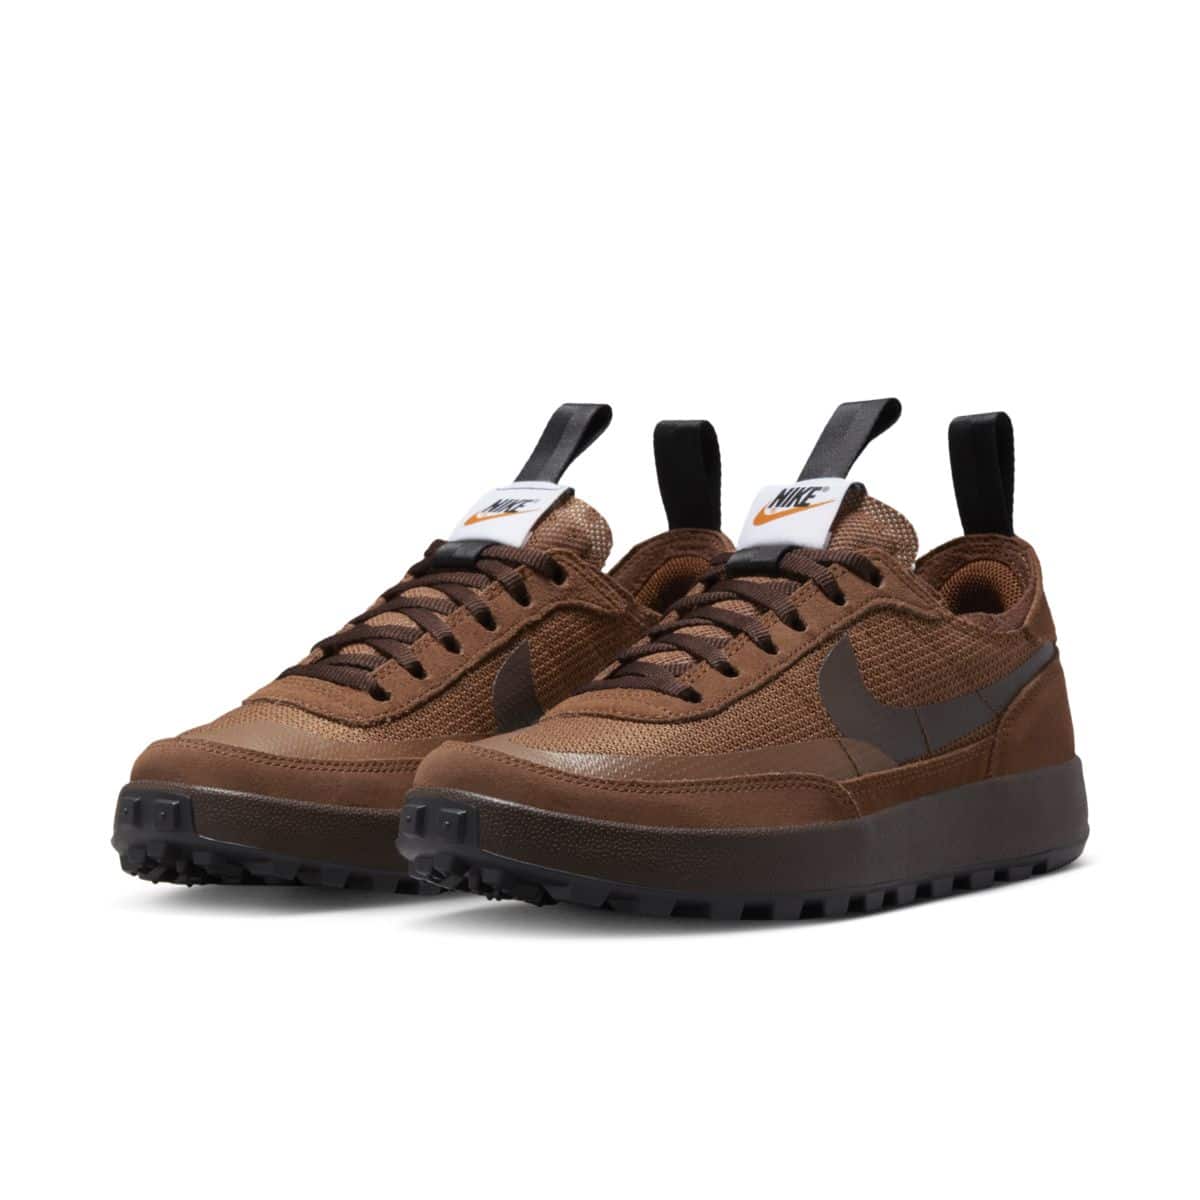 Tom Sachs x NikeCraft General Purpose Shoe Brown DA6672-201 4